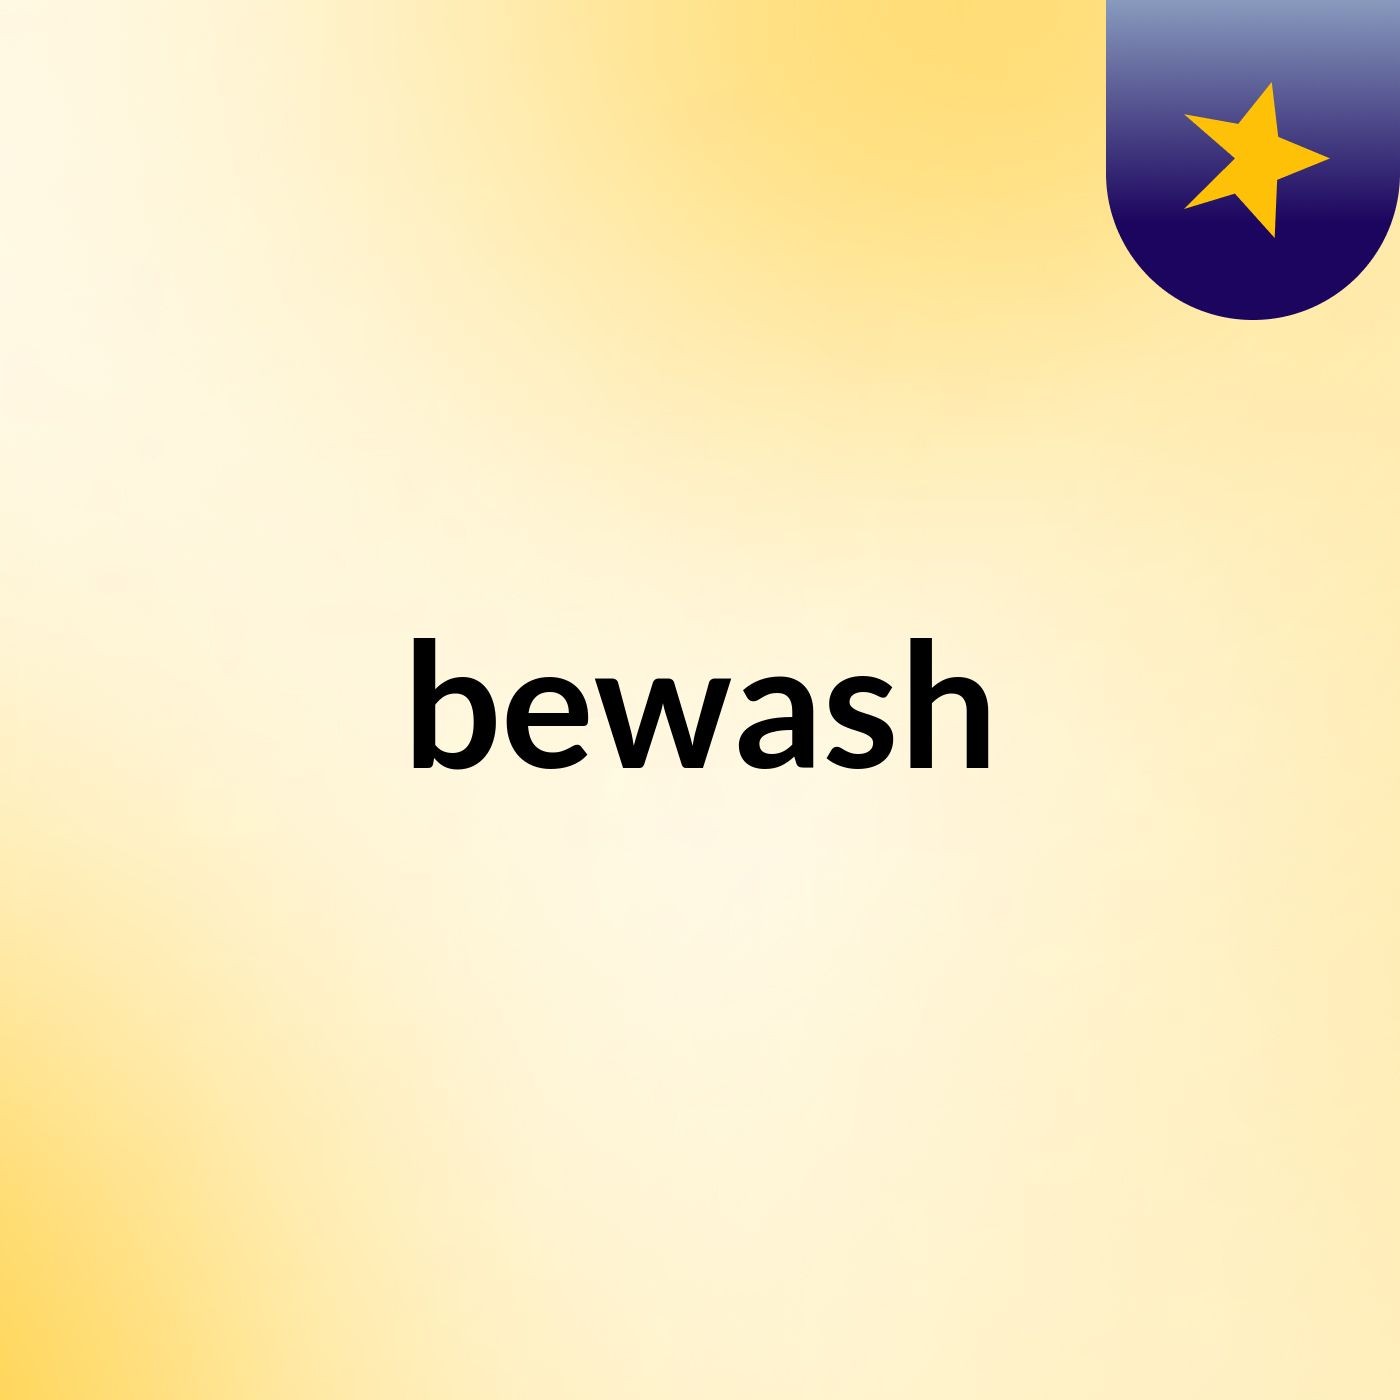 bewash